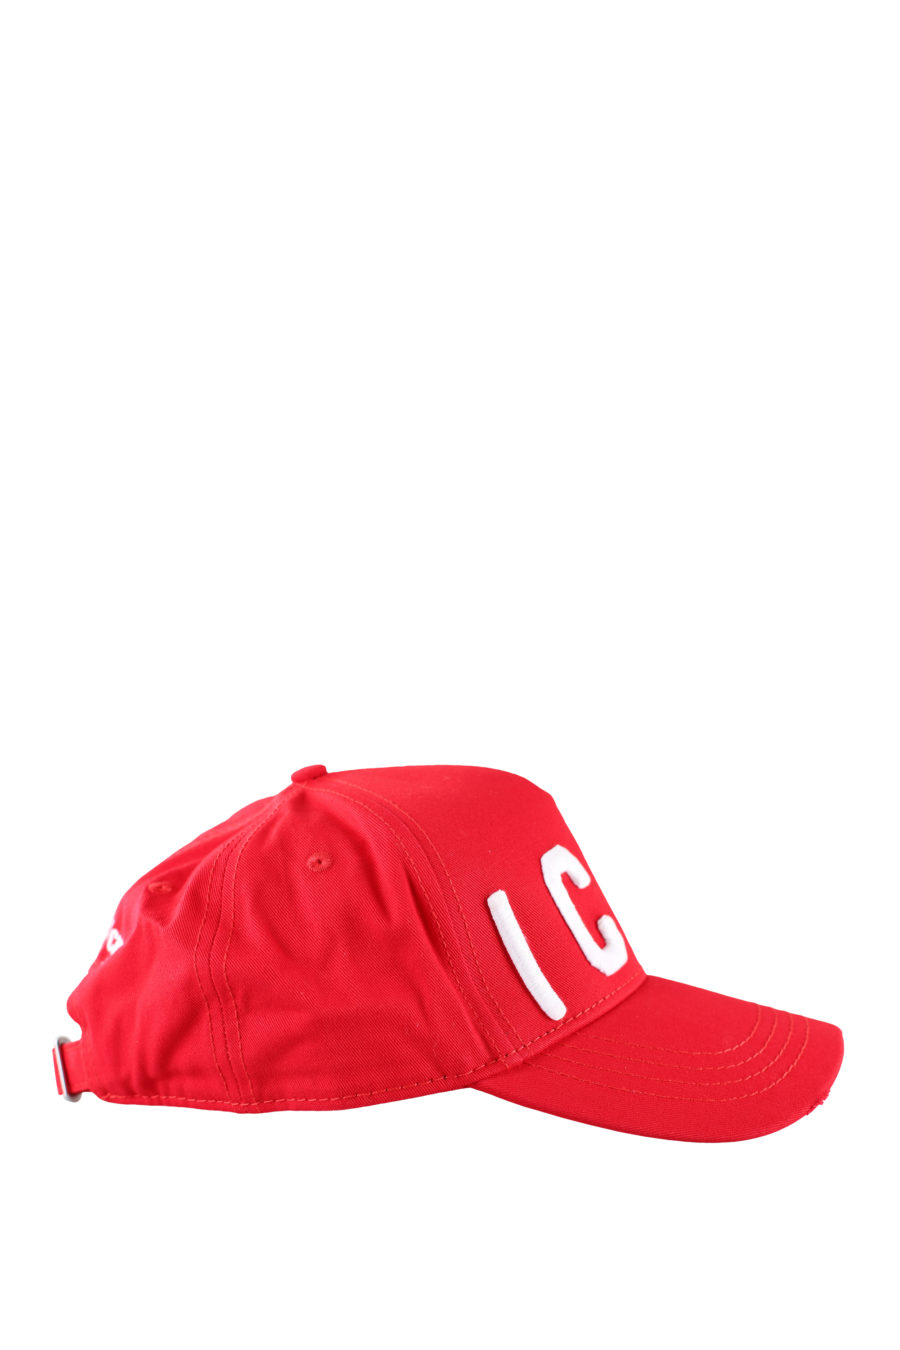 Gorra roja ajustable con logo "icon" blanco - IMG 0060